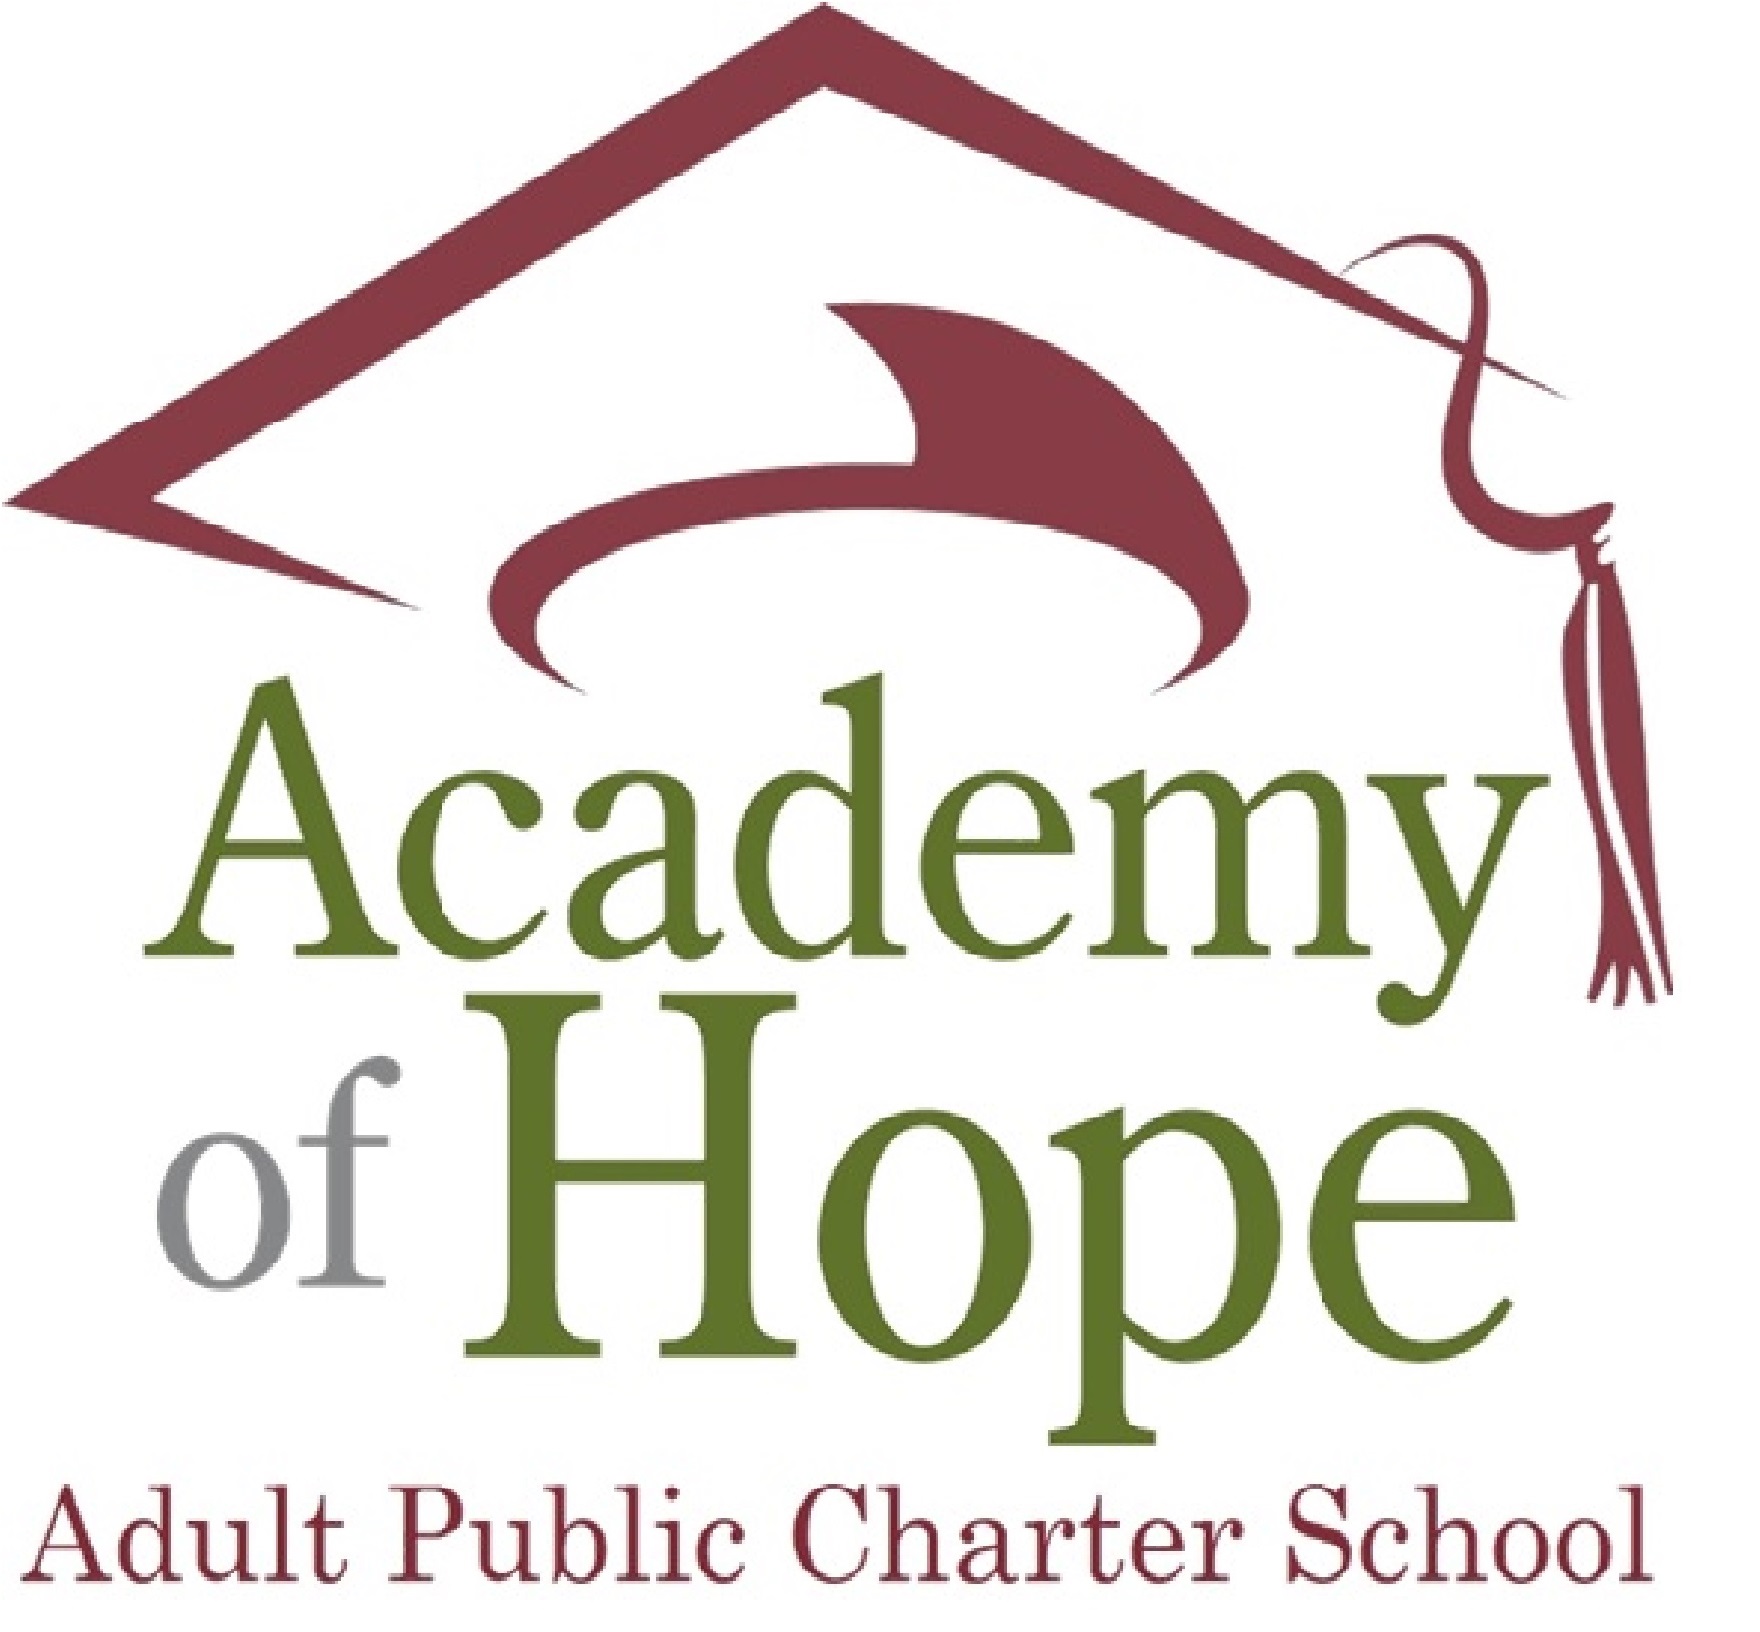 Academy of Hope Adult Public Charter School logo